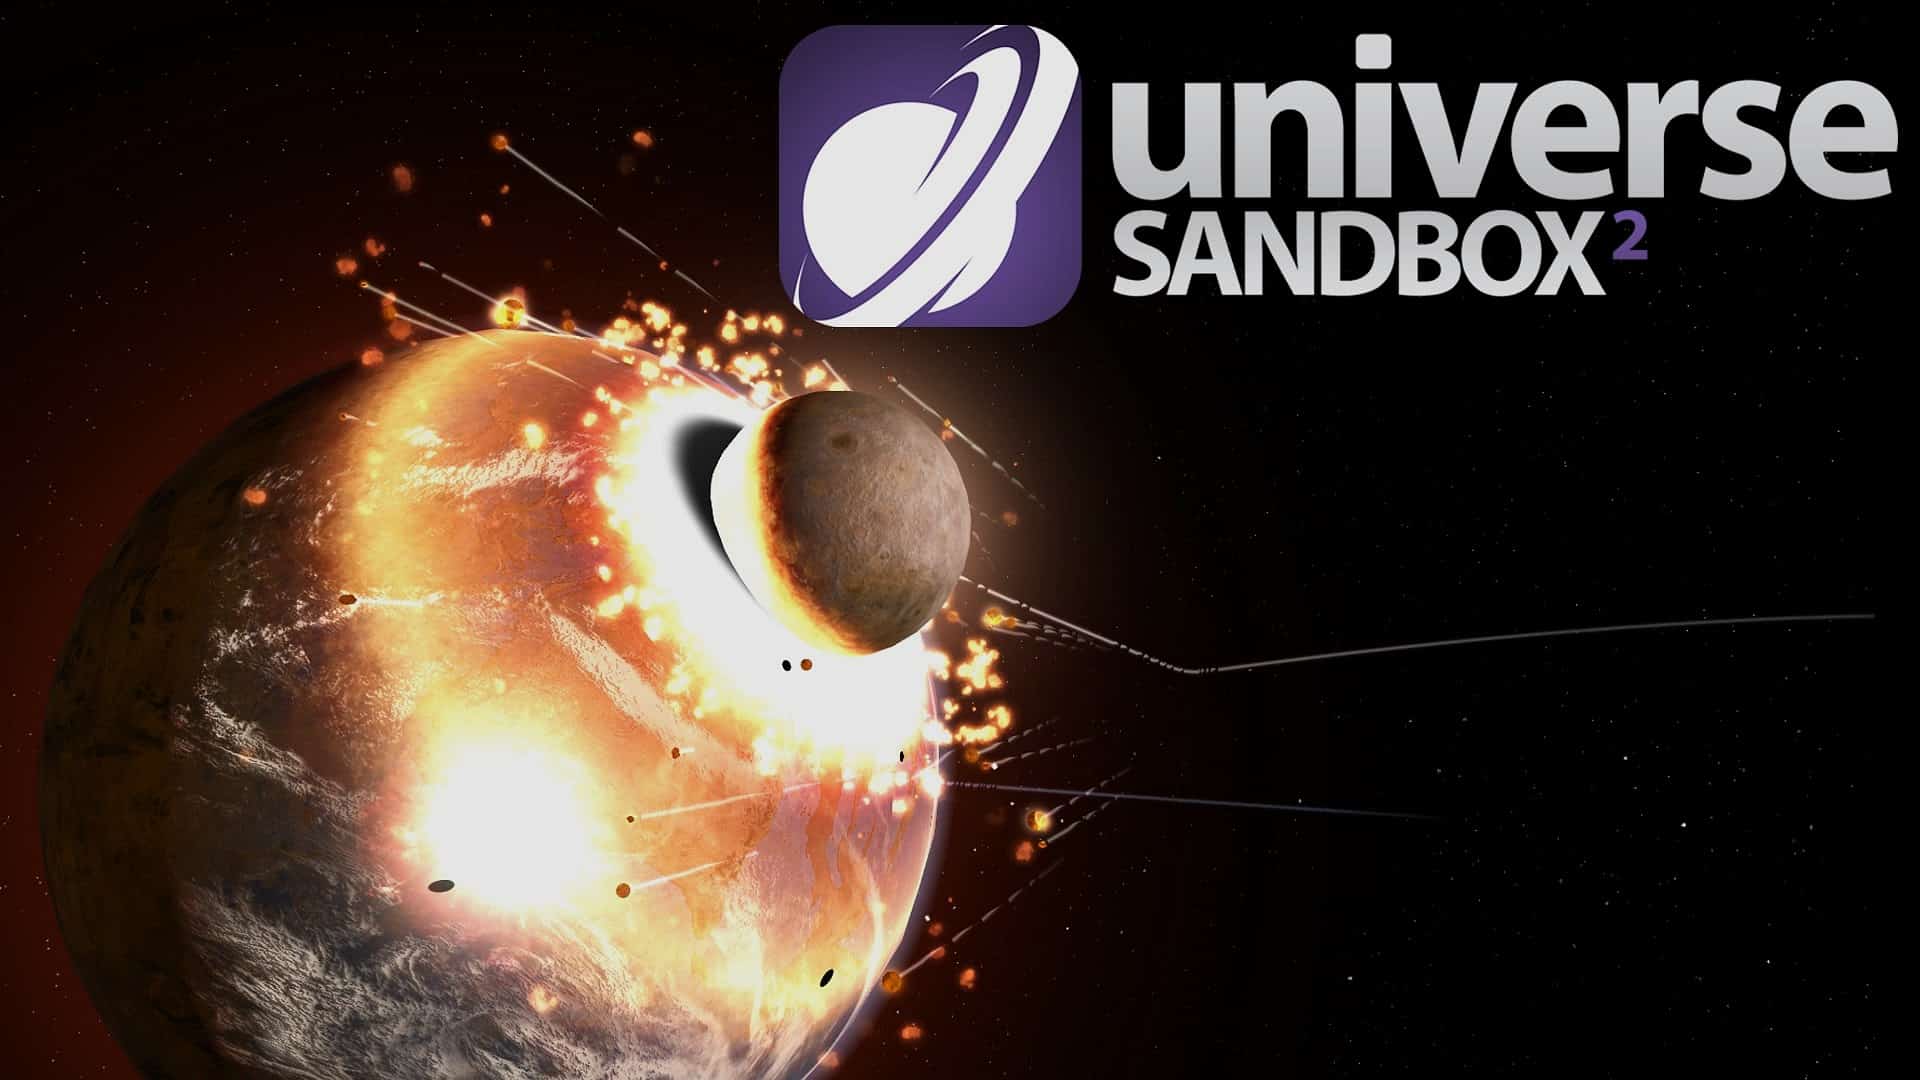 universe sandbox 2 trailer